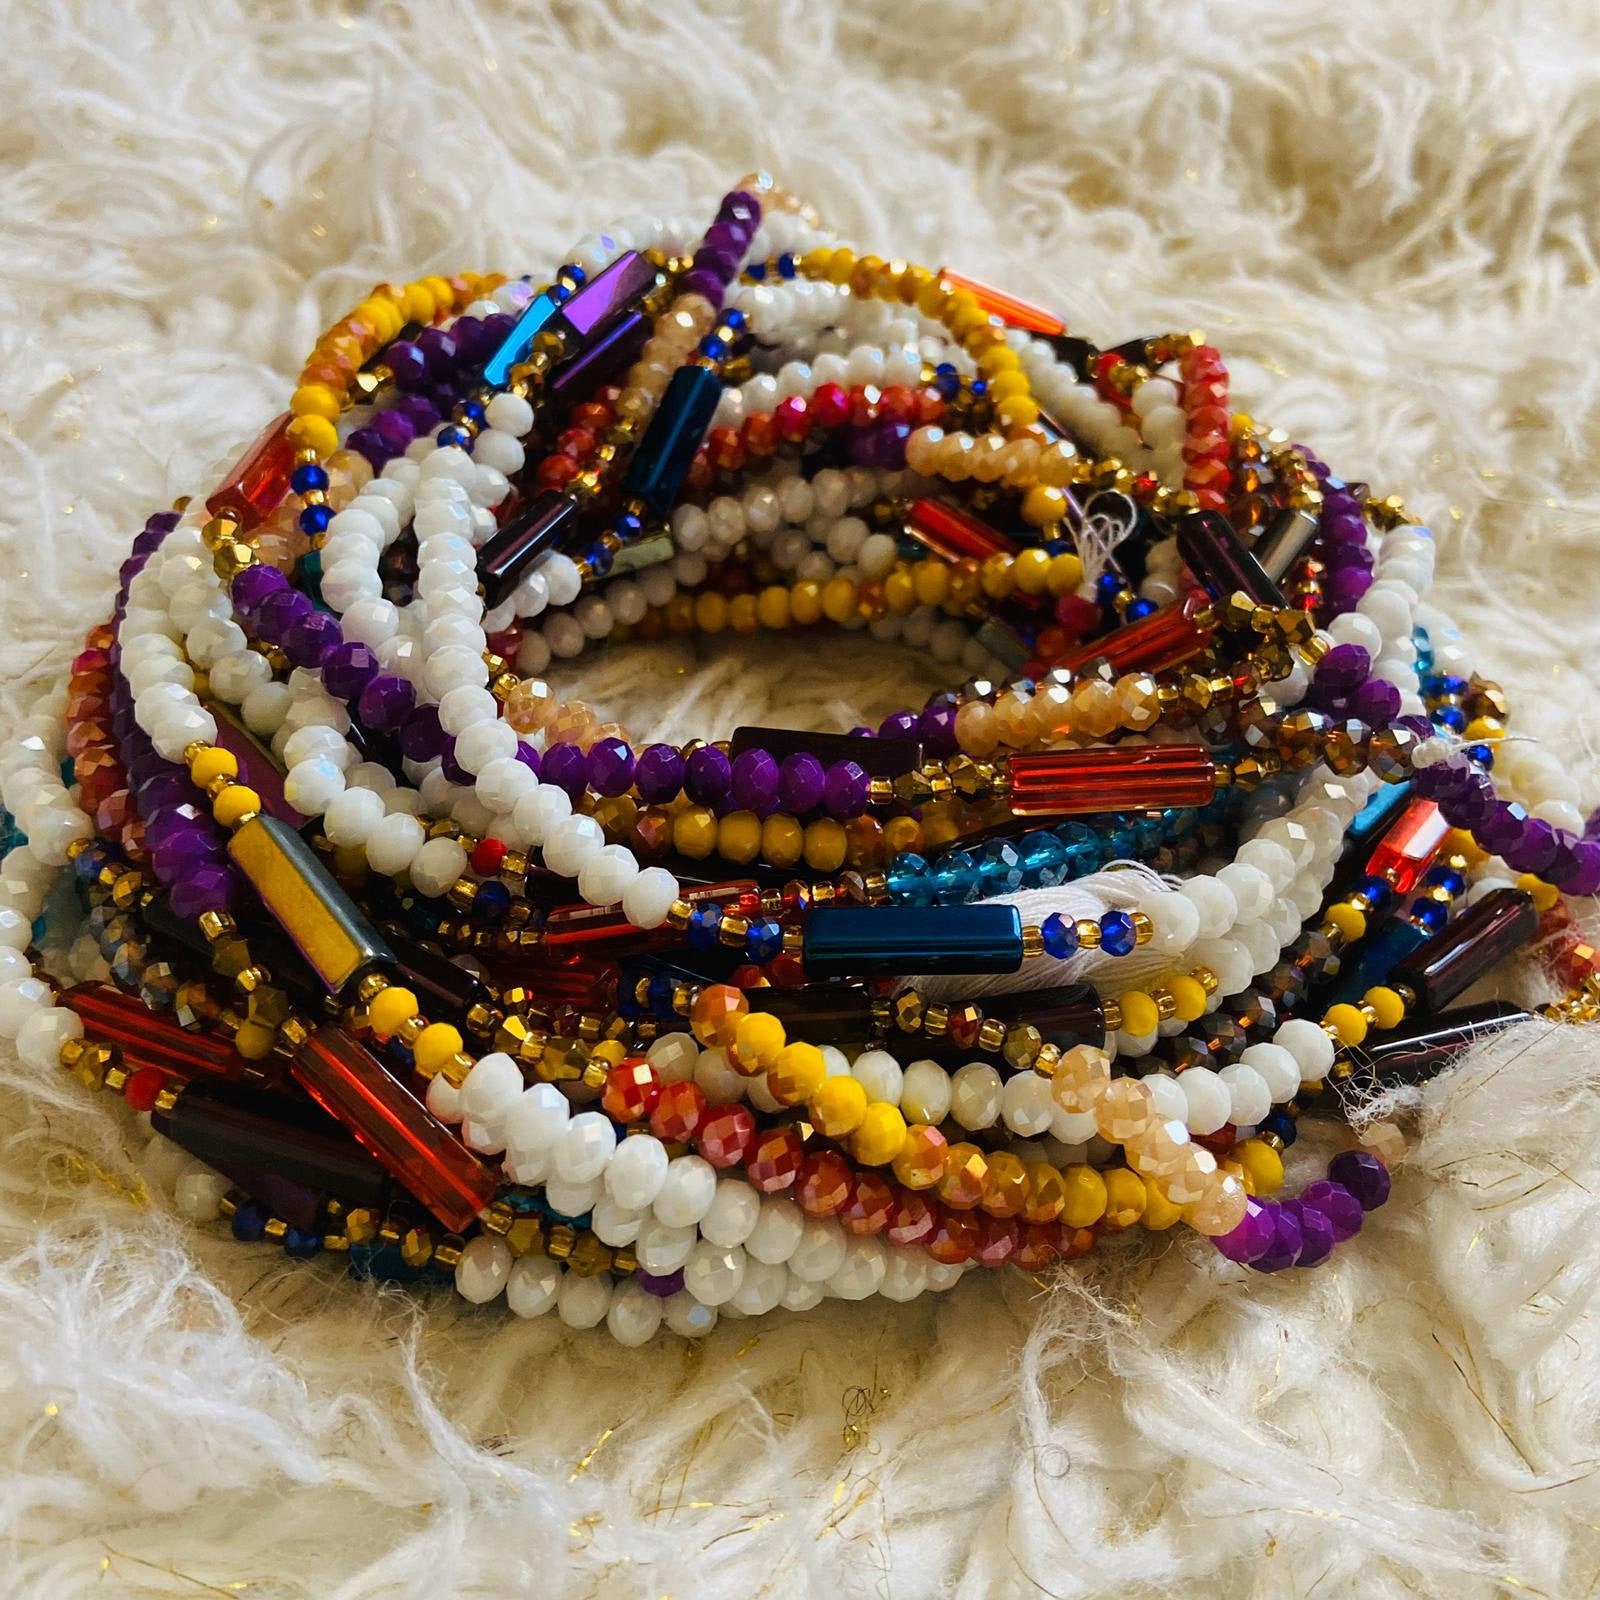 Purple Crystal Belly Beads, Handmade Waist Beads for Weight Tracking, Best  Friend Gift, Inspirational Jewelry, Beach Body Beads, Purple Bead 